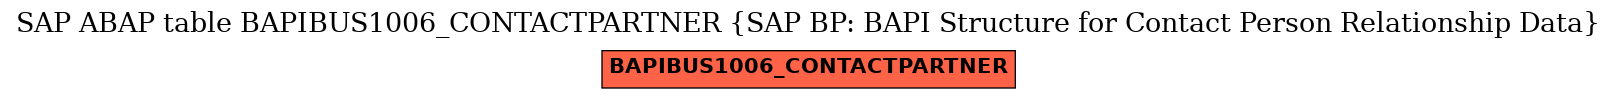 E-R Diagram for table BAPIBUS1006_CONTACTPARTNER (SAP BP: BAPI Structure for Contact Person Relationship Data)